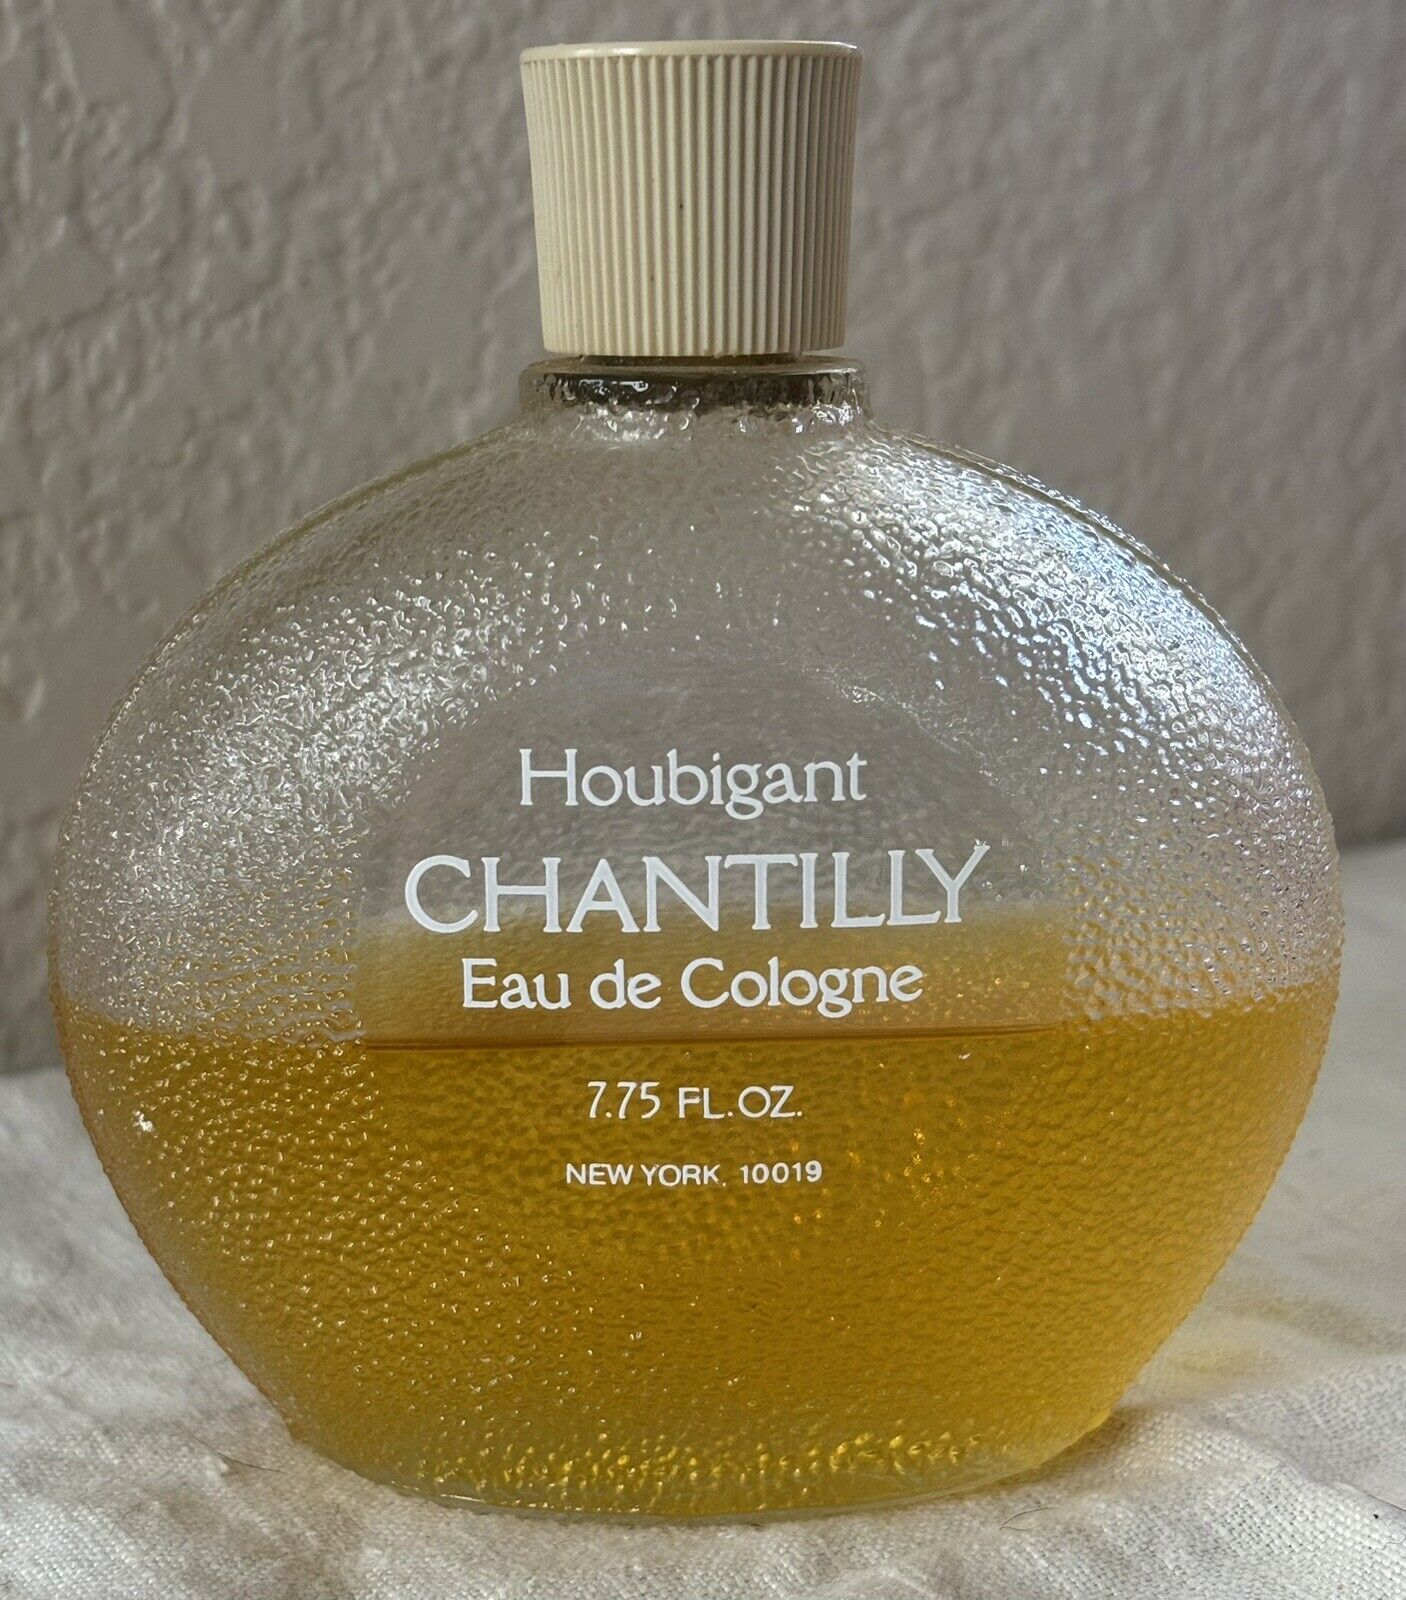 VINTAGE CHANTILLY BY HOUBIGANT EAU DE COLOGNE 7.75 FL OZ 60% FULL